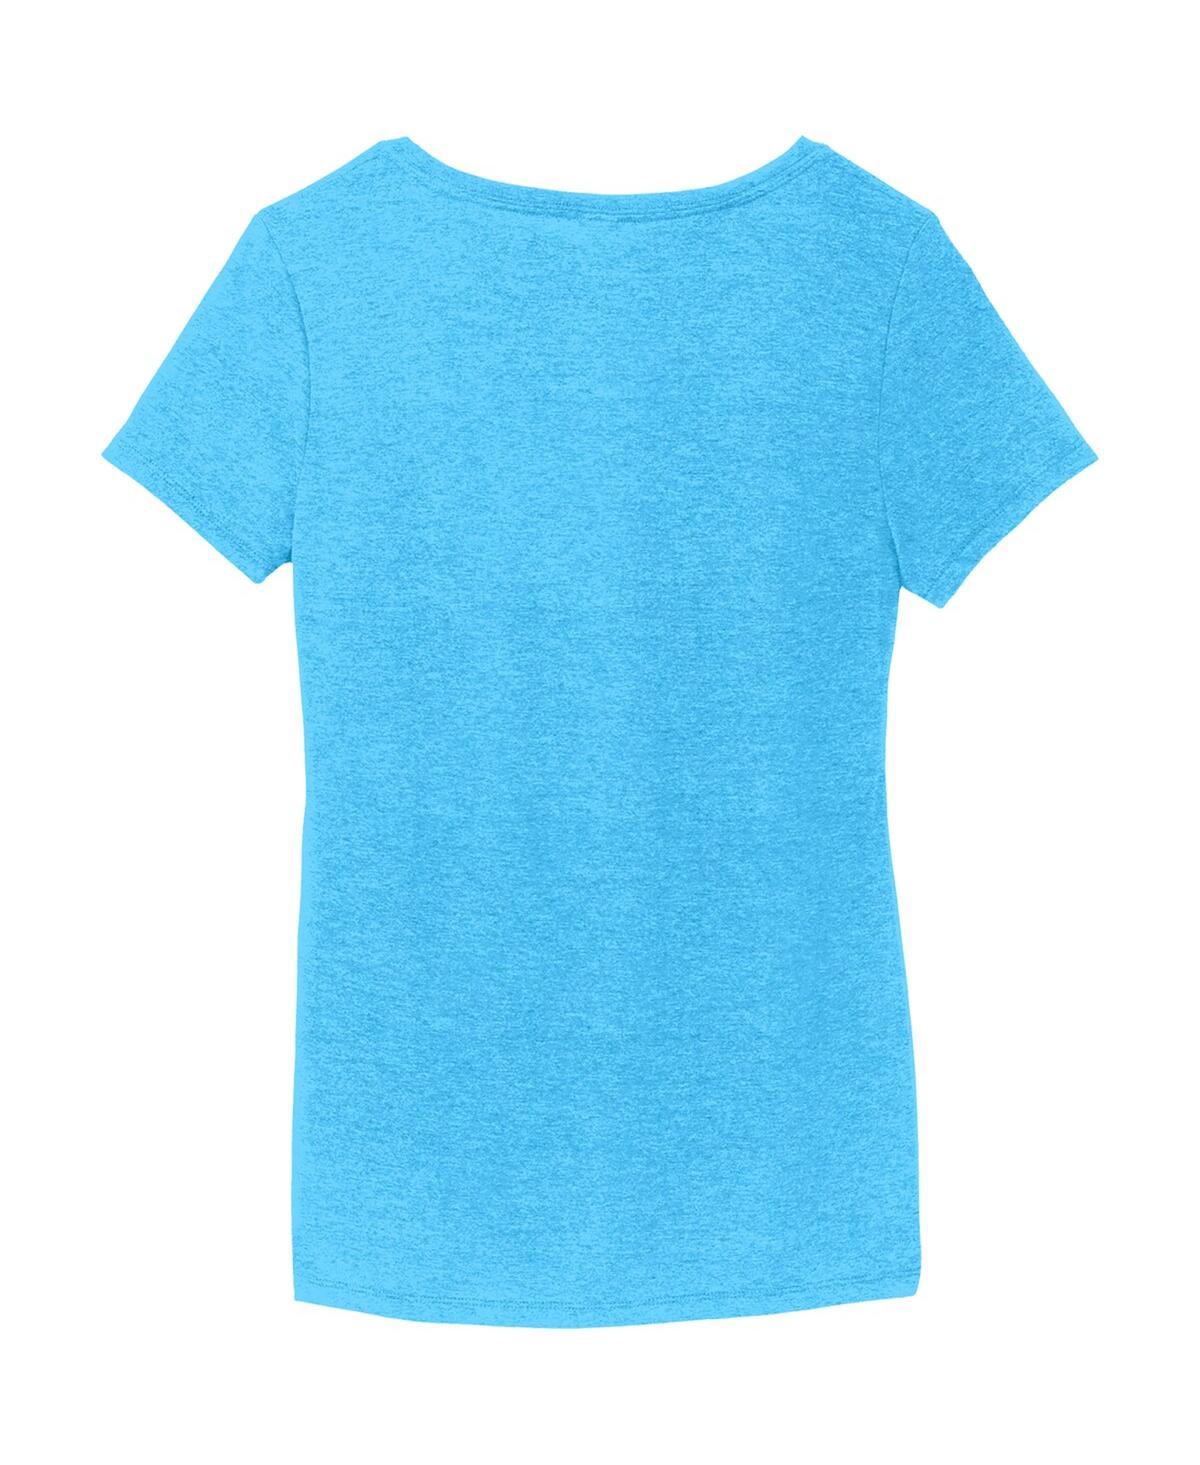 Shop Hendrick Motorsports Team Collection Women's  Blue William Byron Tri-blend V-neck T-shirt